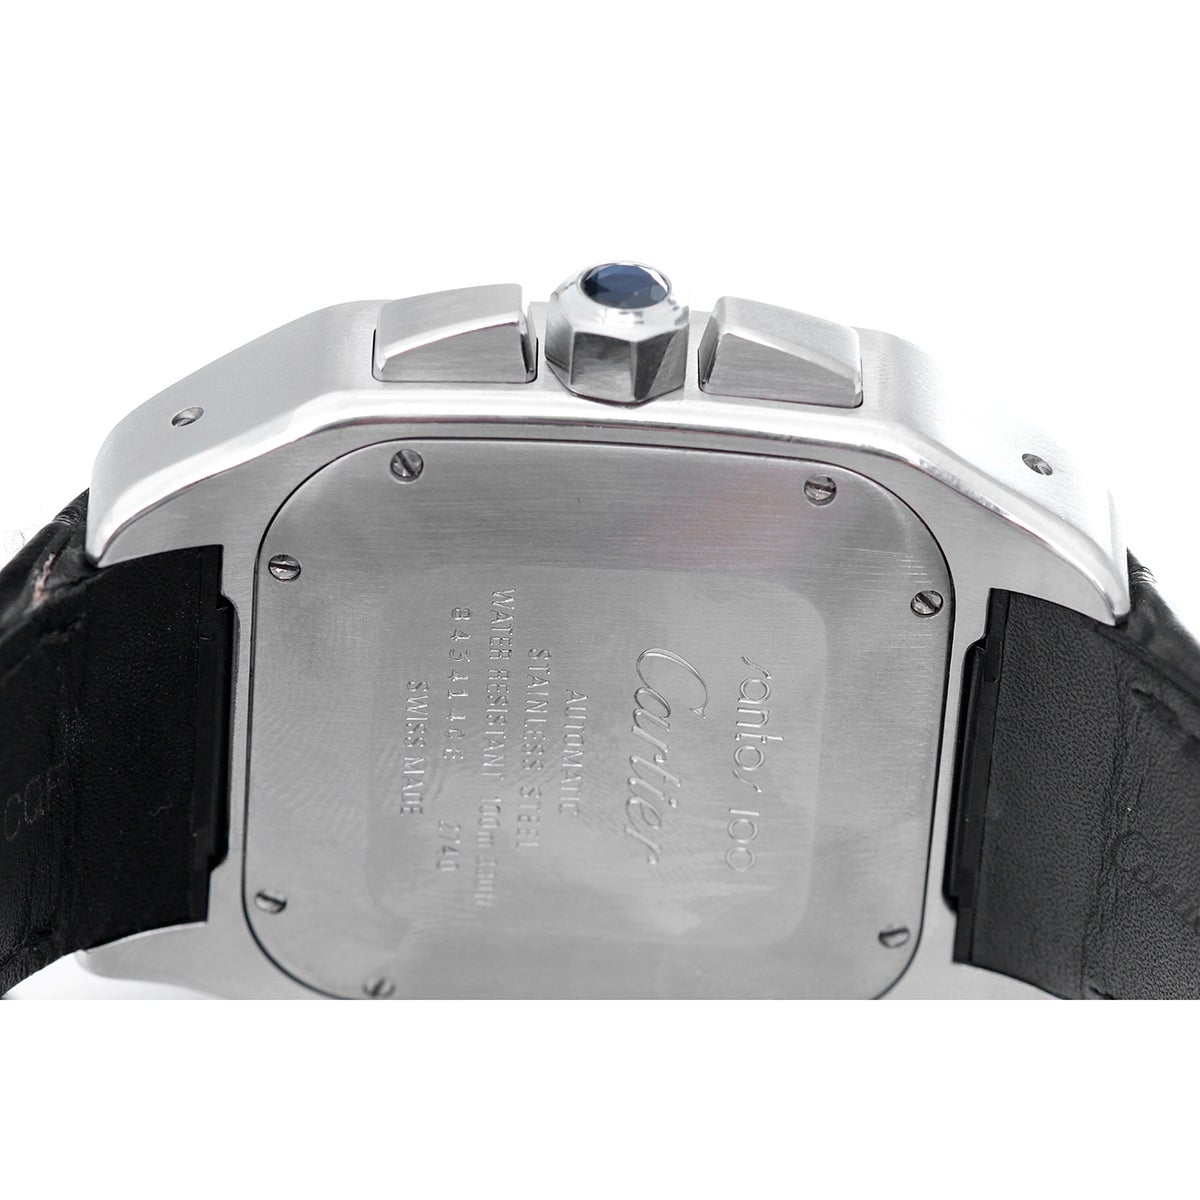 cartier watch 2740 price